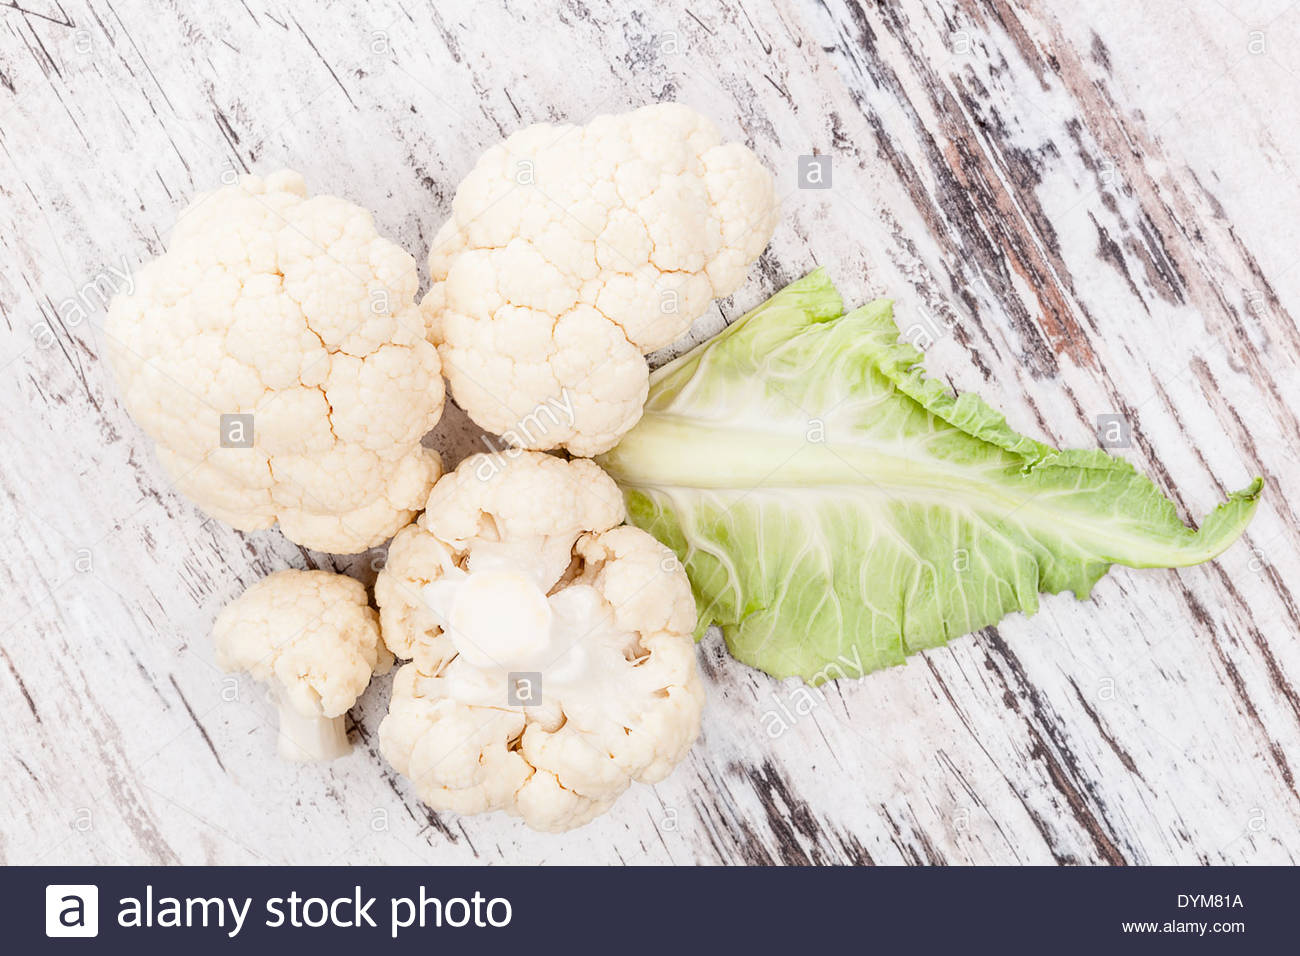 Luxurious Cauliflower Background Stock Photos